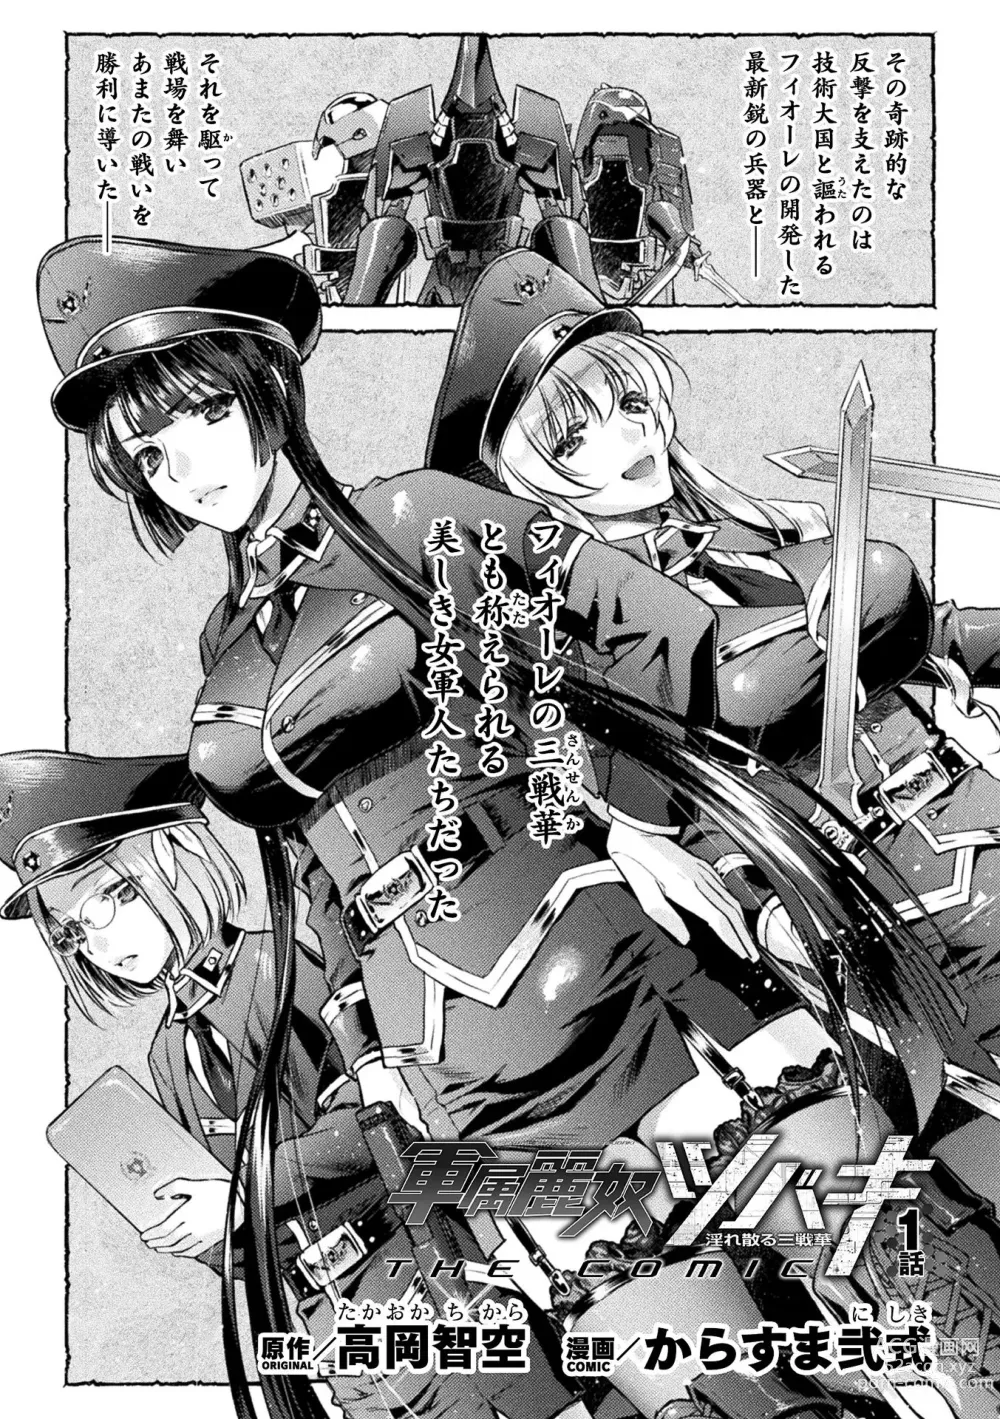 Page 9 of manga Kukkoro Heroines Vol. 34